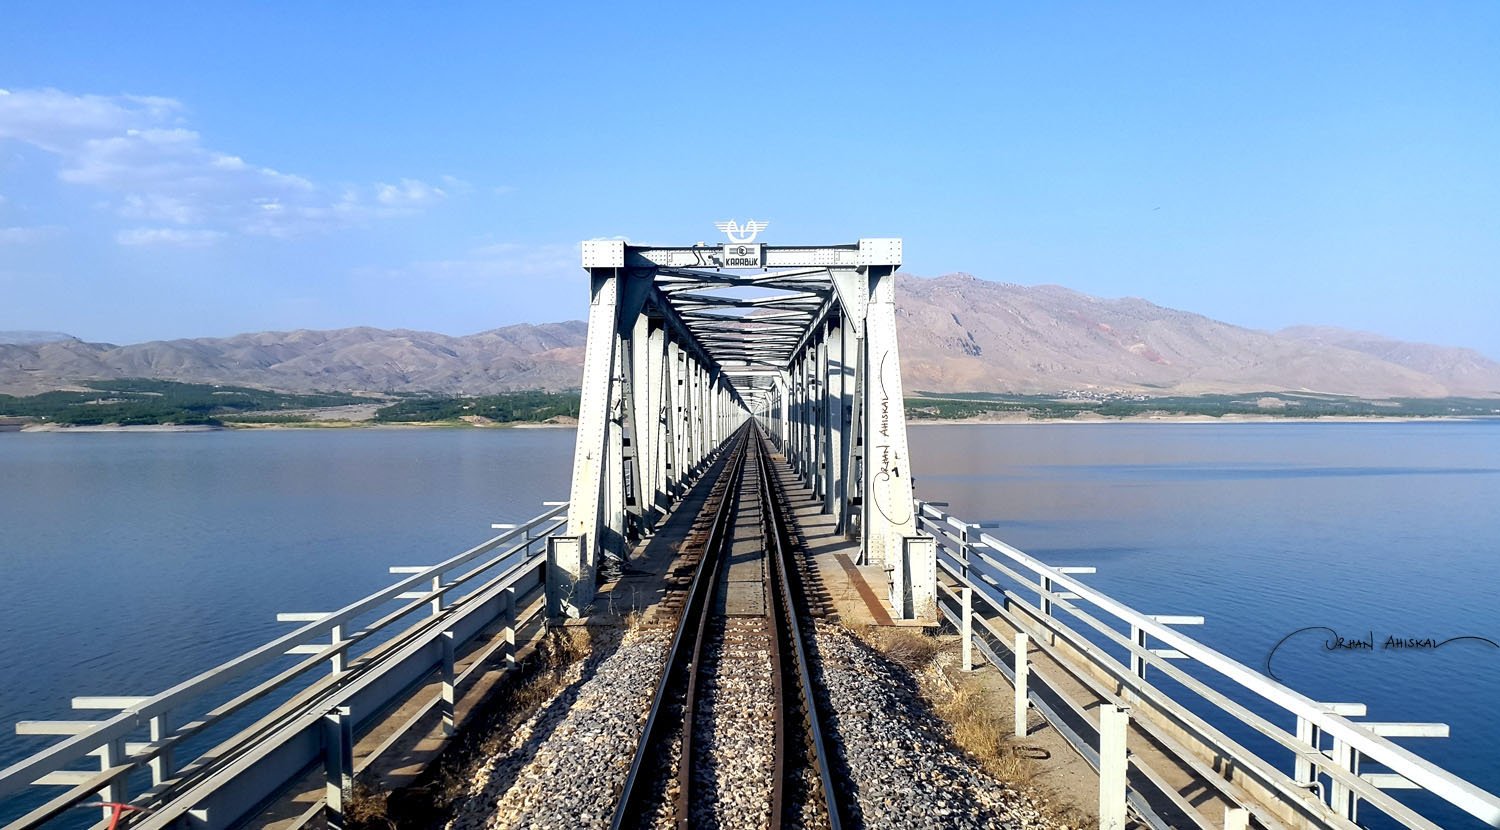 Rail bridge on Karakaya Dam lake, near Malatya. Photo: Orhan Ahıskal